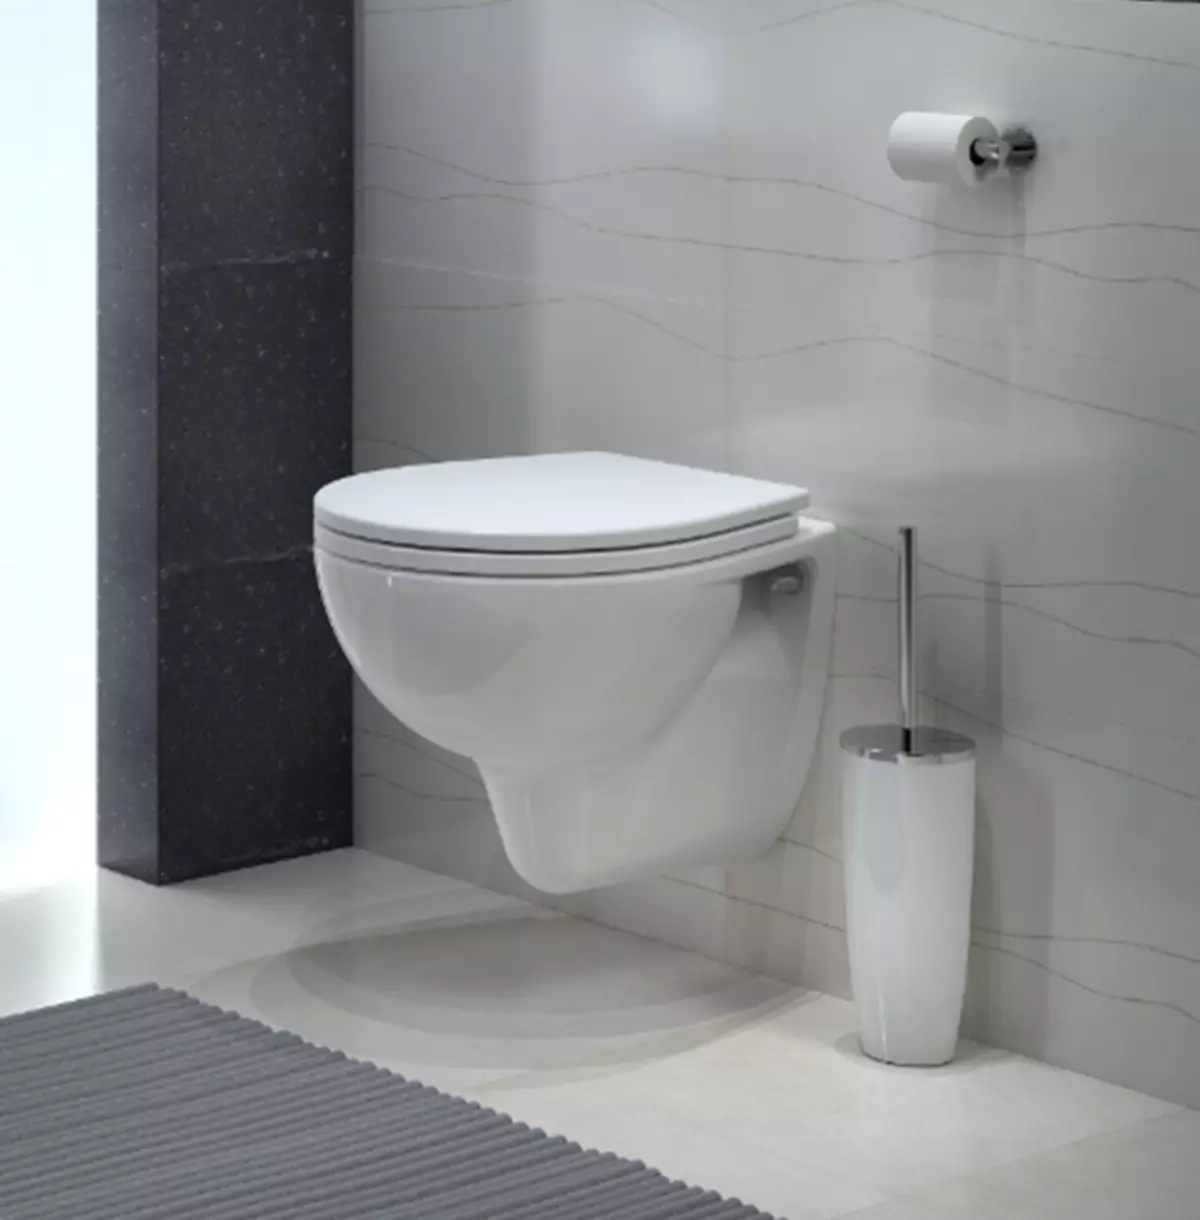 Kolo τουαλέτες: Περιγραφή των αιωρούμενων και τουαλέτες όροφο, στυλ και σόλο, Nova Pro Rimfree και Runa, Idol και άλλα μοντέλα 10529_14